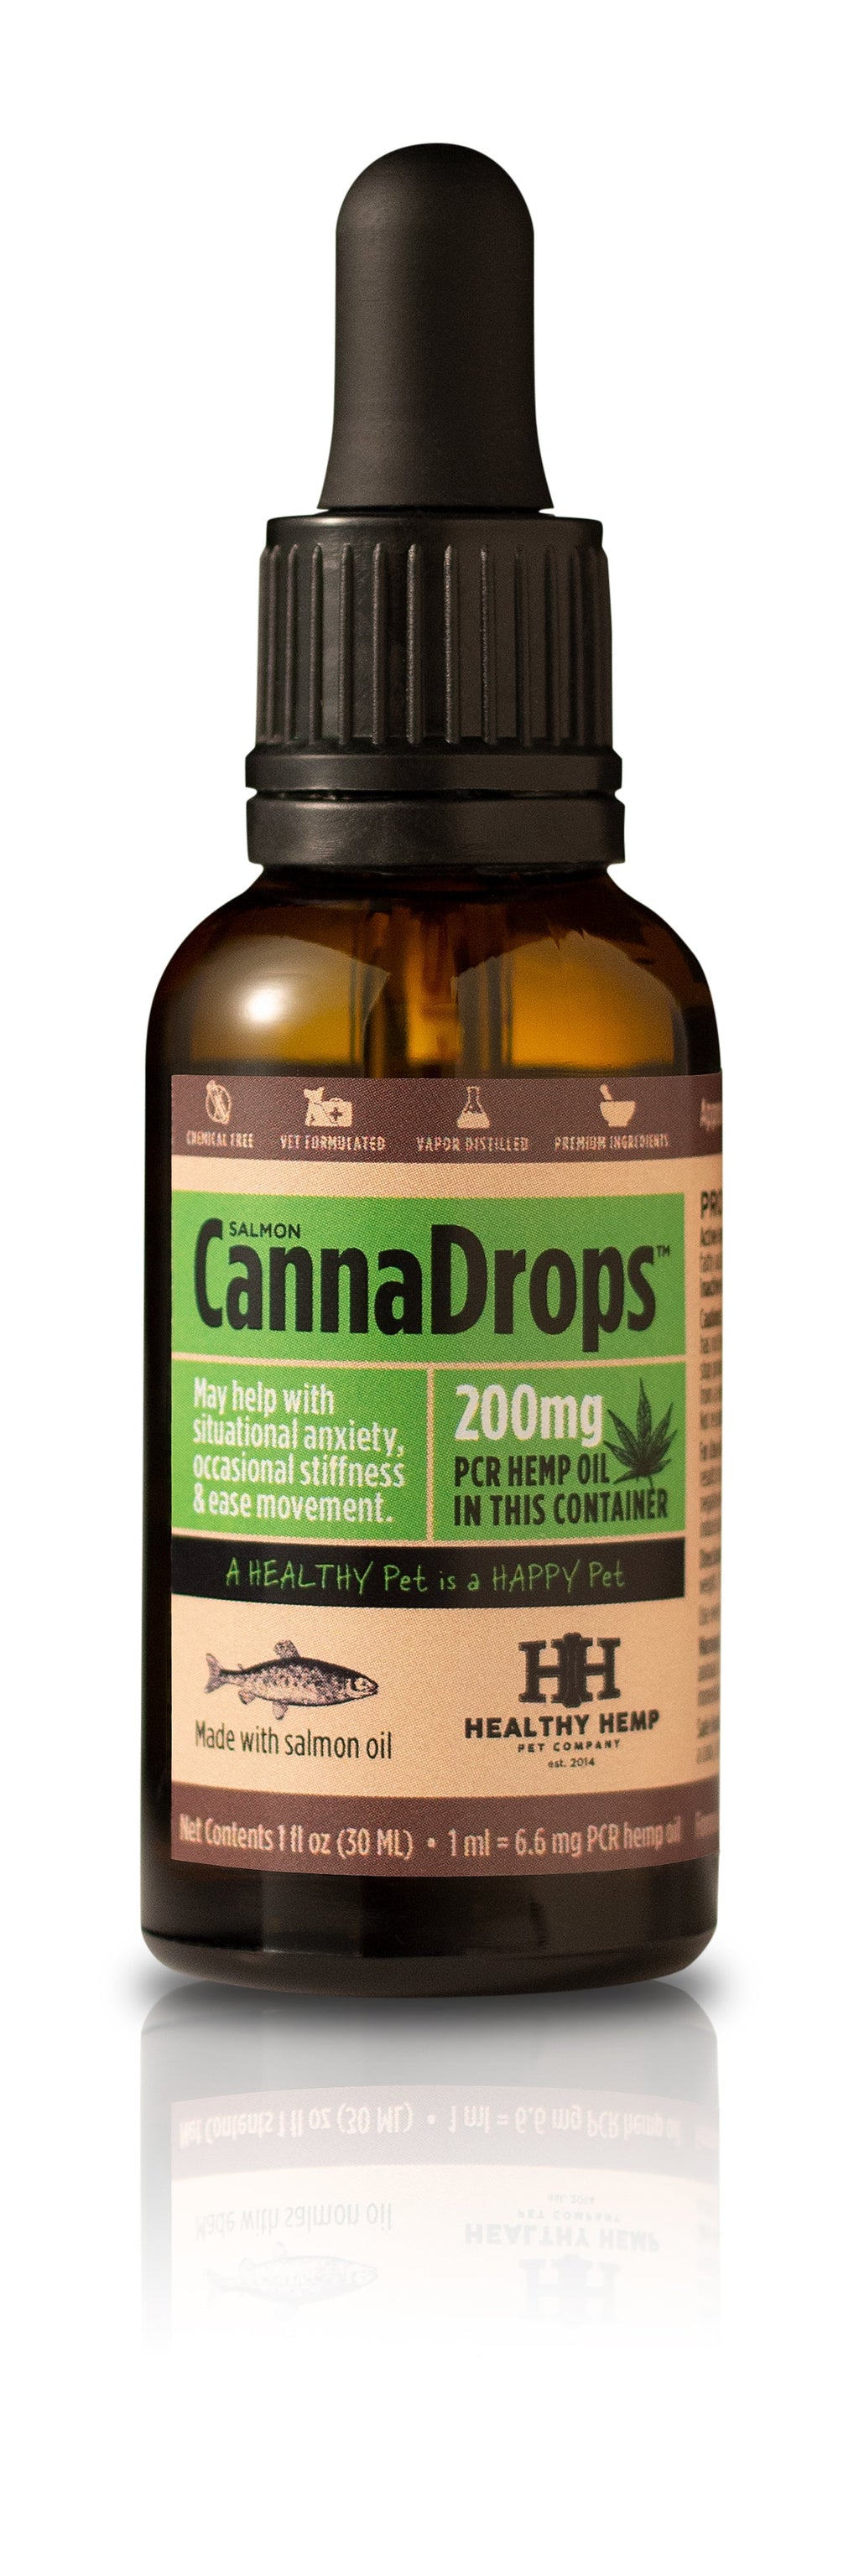 Healthy Hemp CannaDrops Salmon Hemp Oil Drops - 200mg Cat and Dog Supplements - 5 oz  